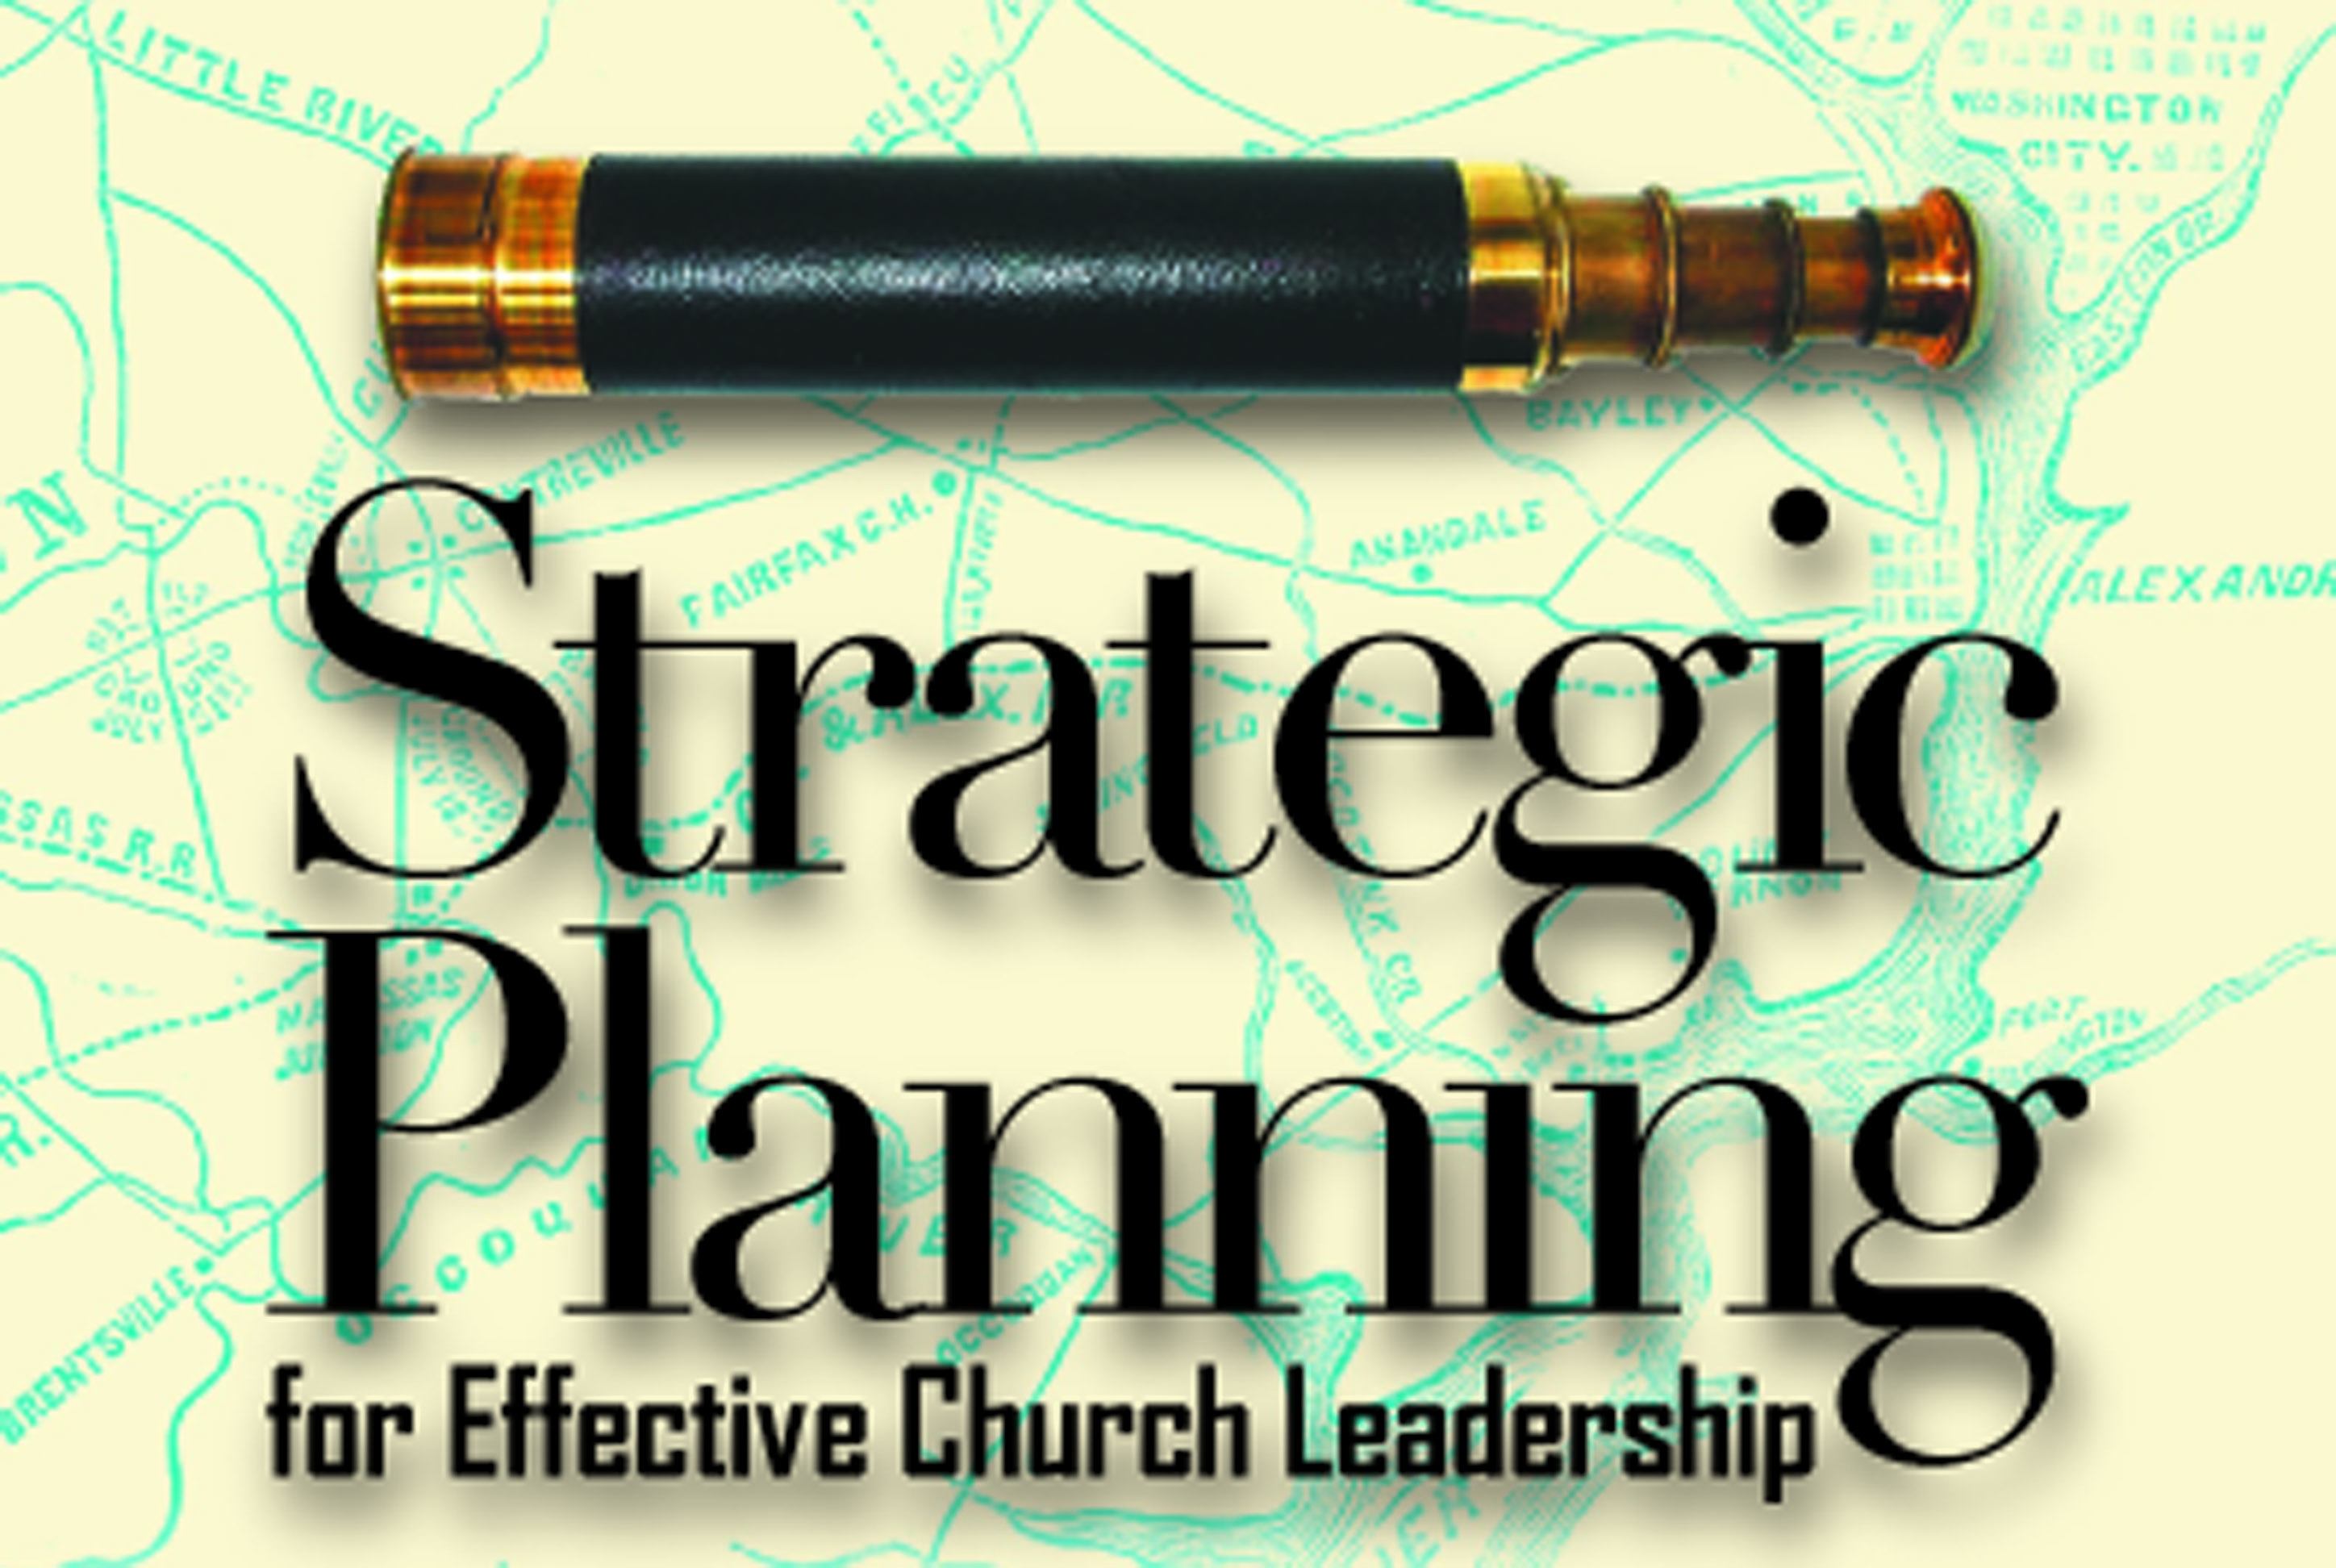 Strategic Planning.indd